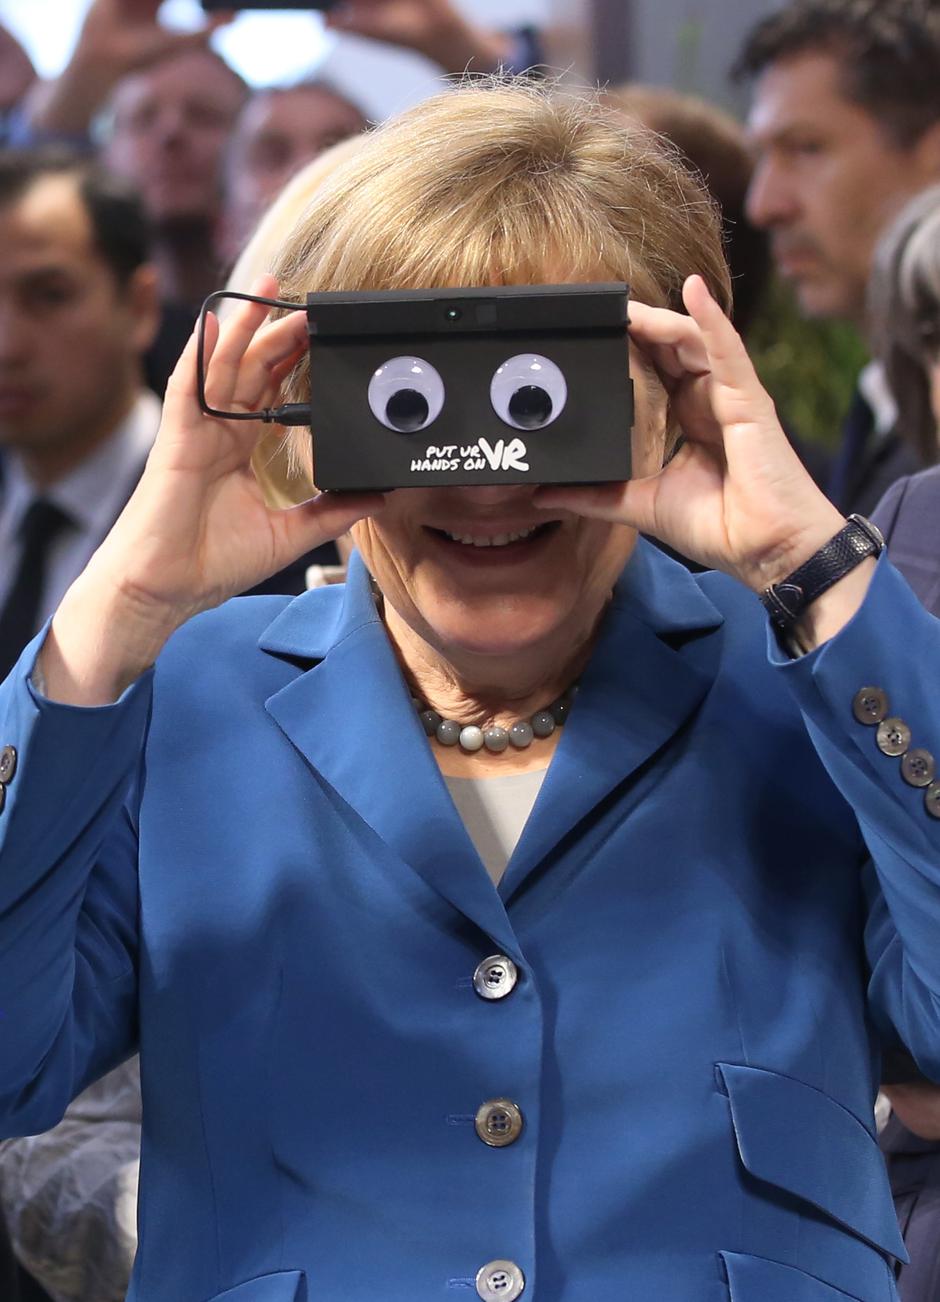 Angela Merkel | Author: DPA/PIXSELL